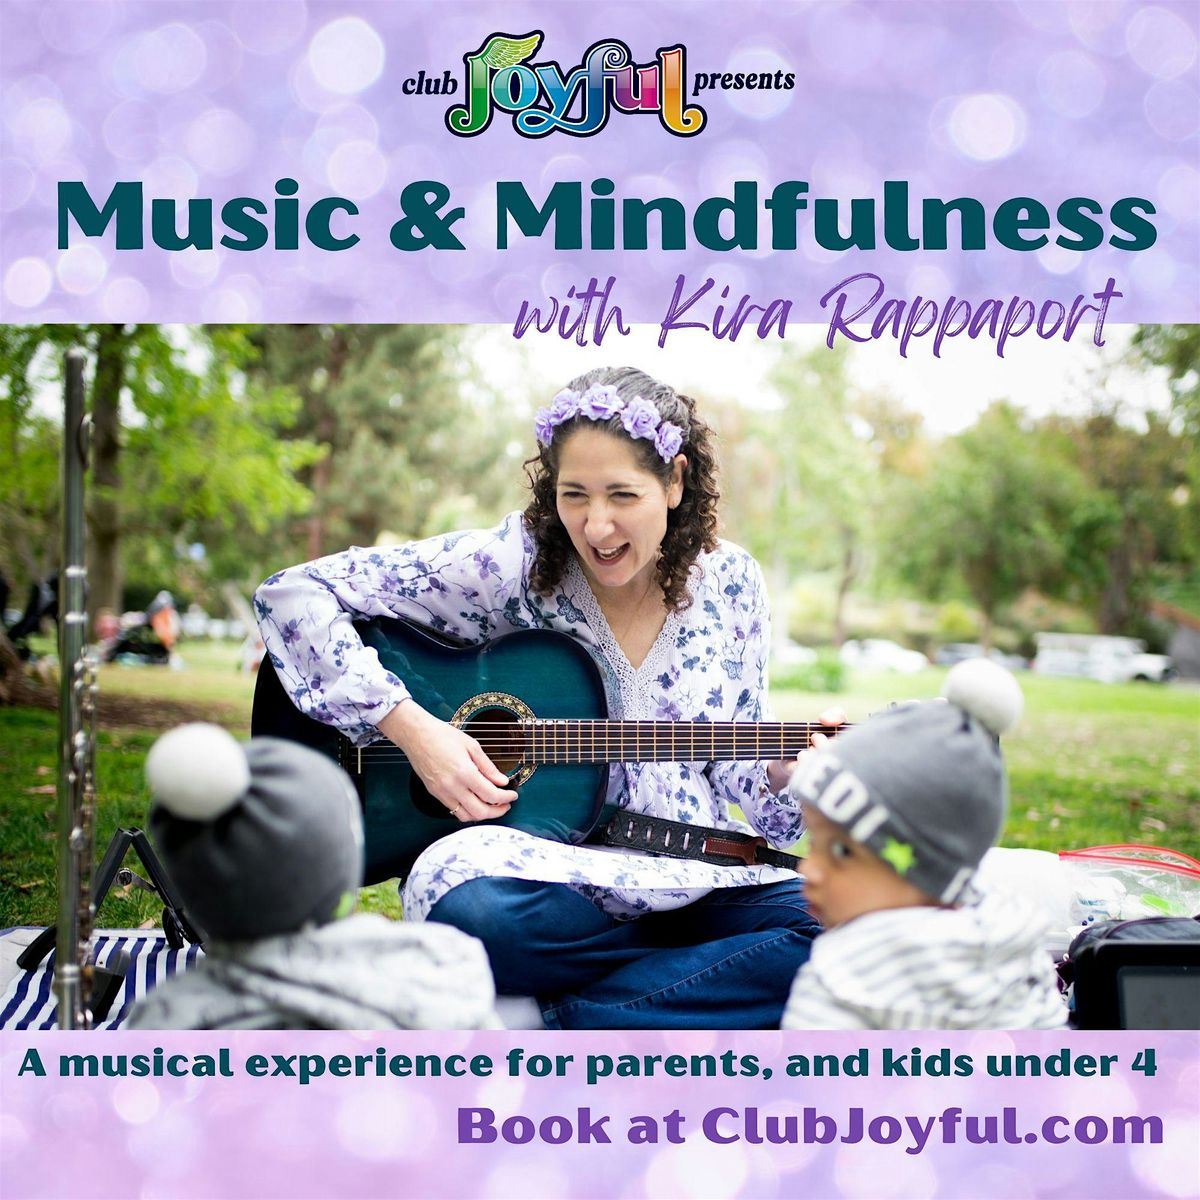 Music and Mindfulness FREE Concert with Kira at Club Joyful